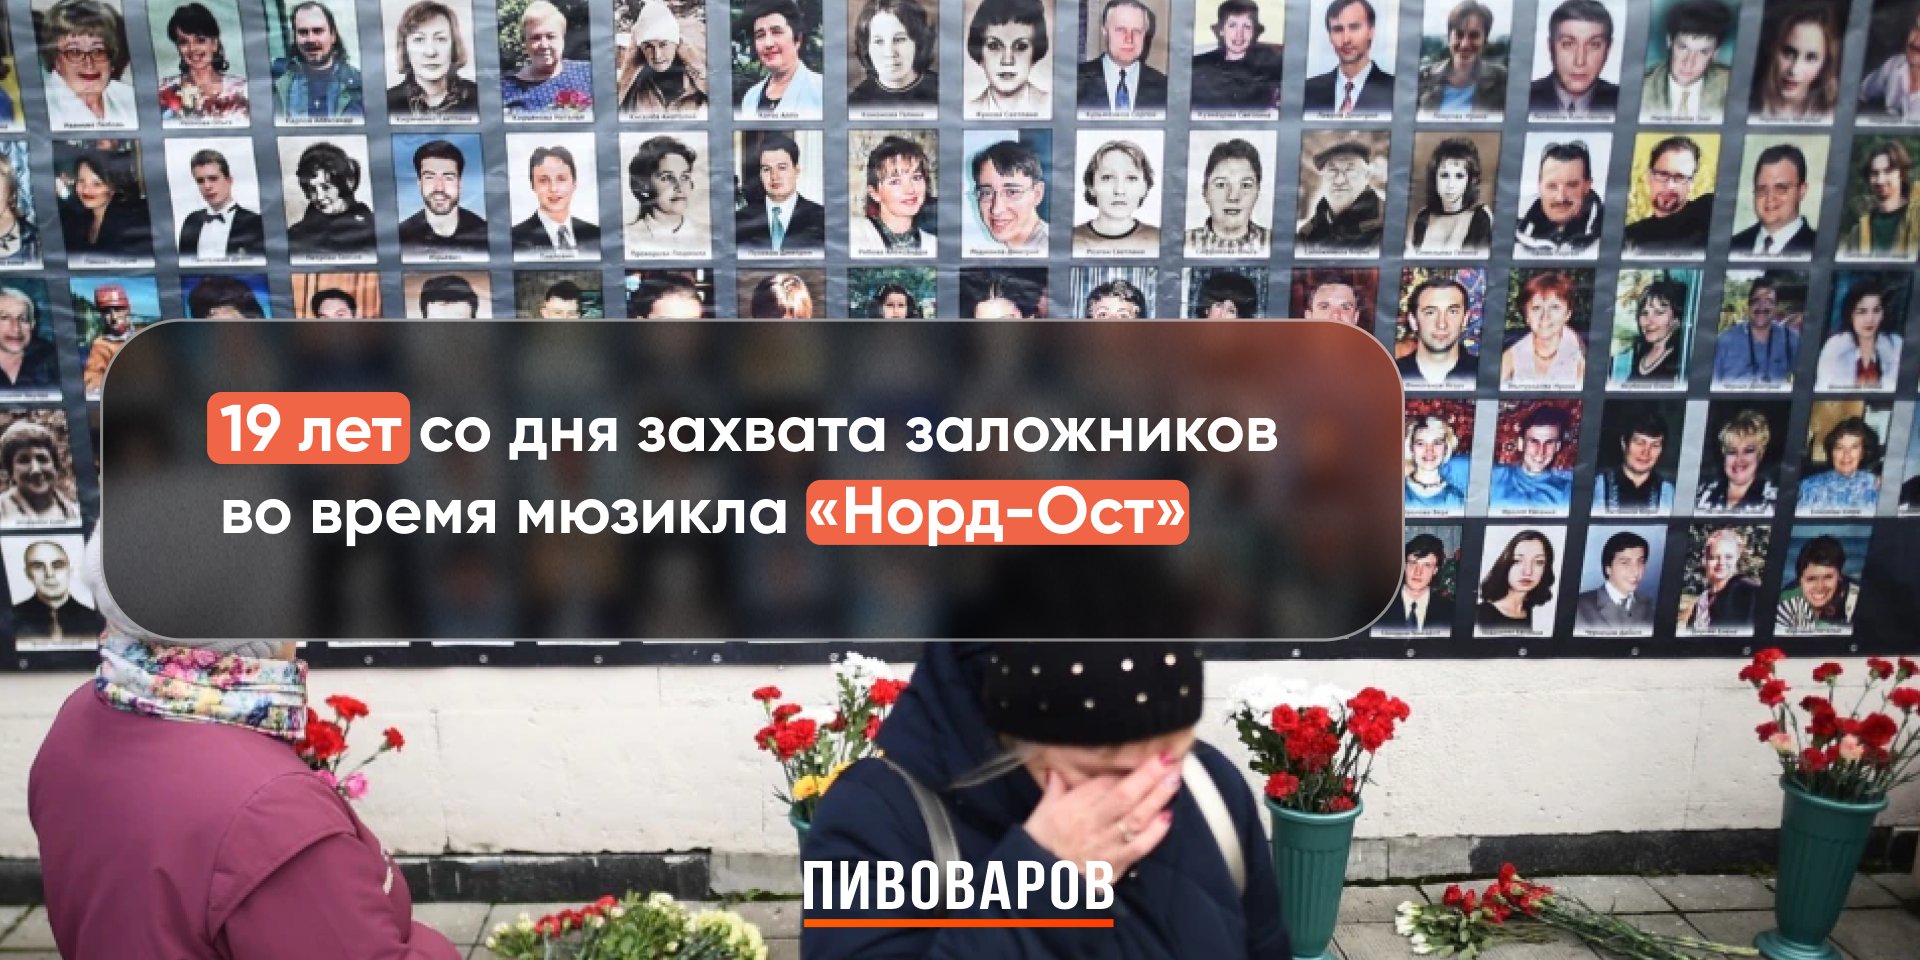 Нордост в Москве теракт год